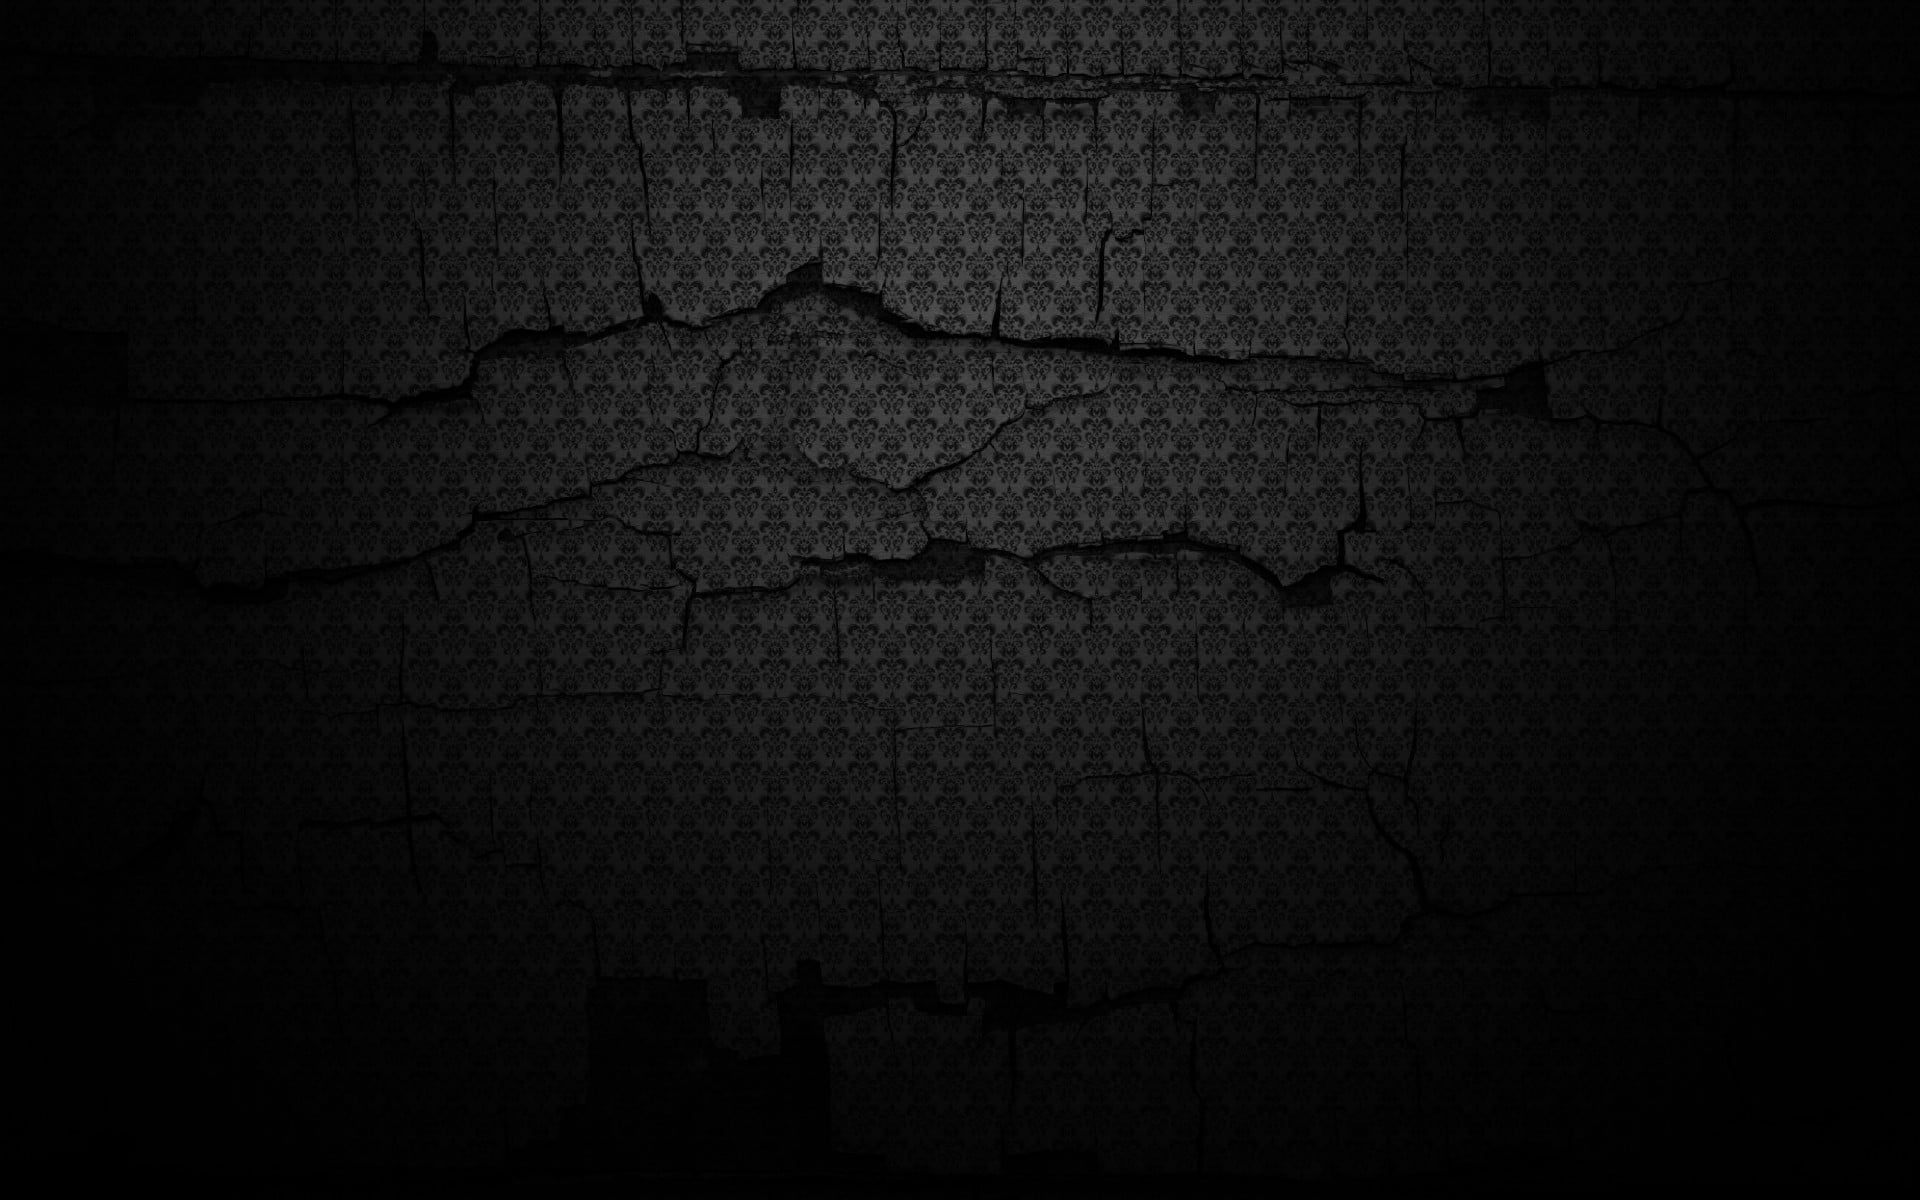 cracked wallpaper, texture, monochrome, pattern, minimalism